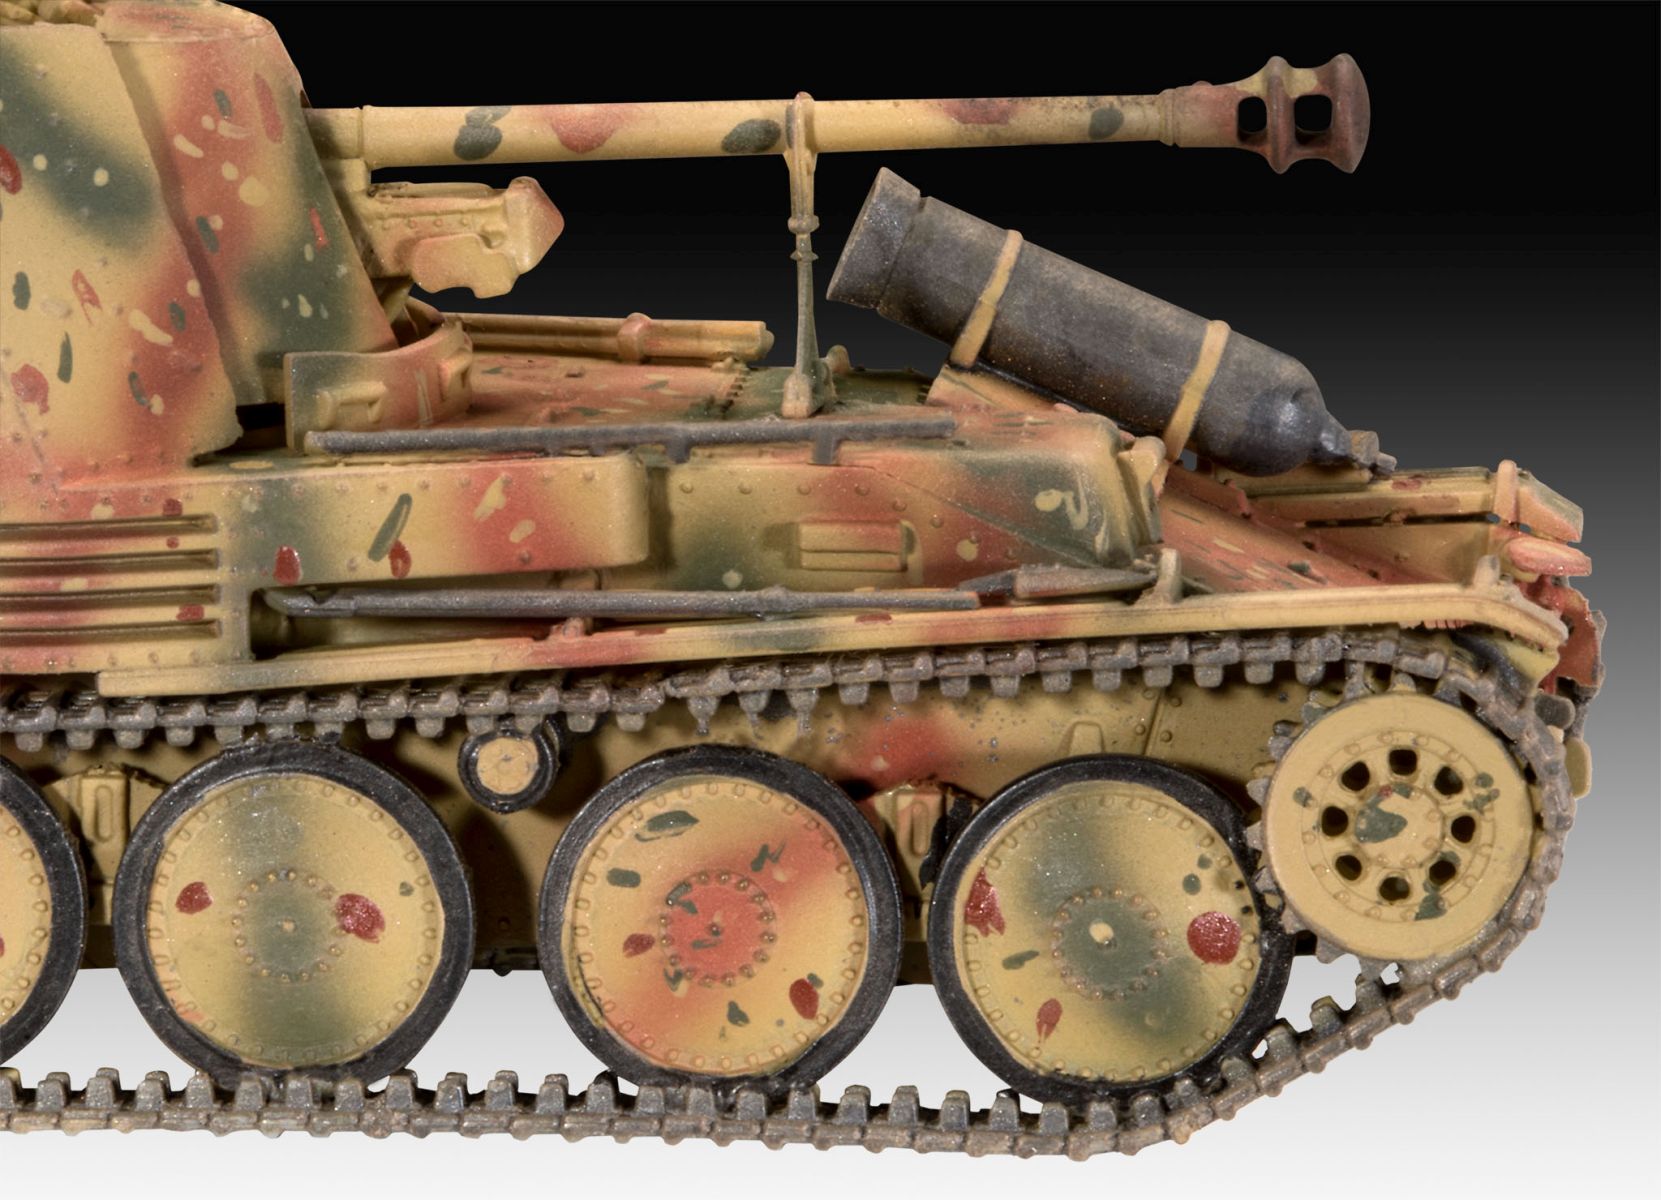 Revell 03316 - Sd.Kfz. 138 Marder III Ausf. M